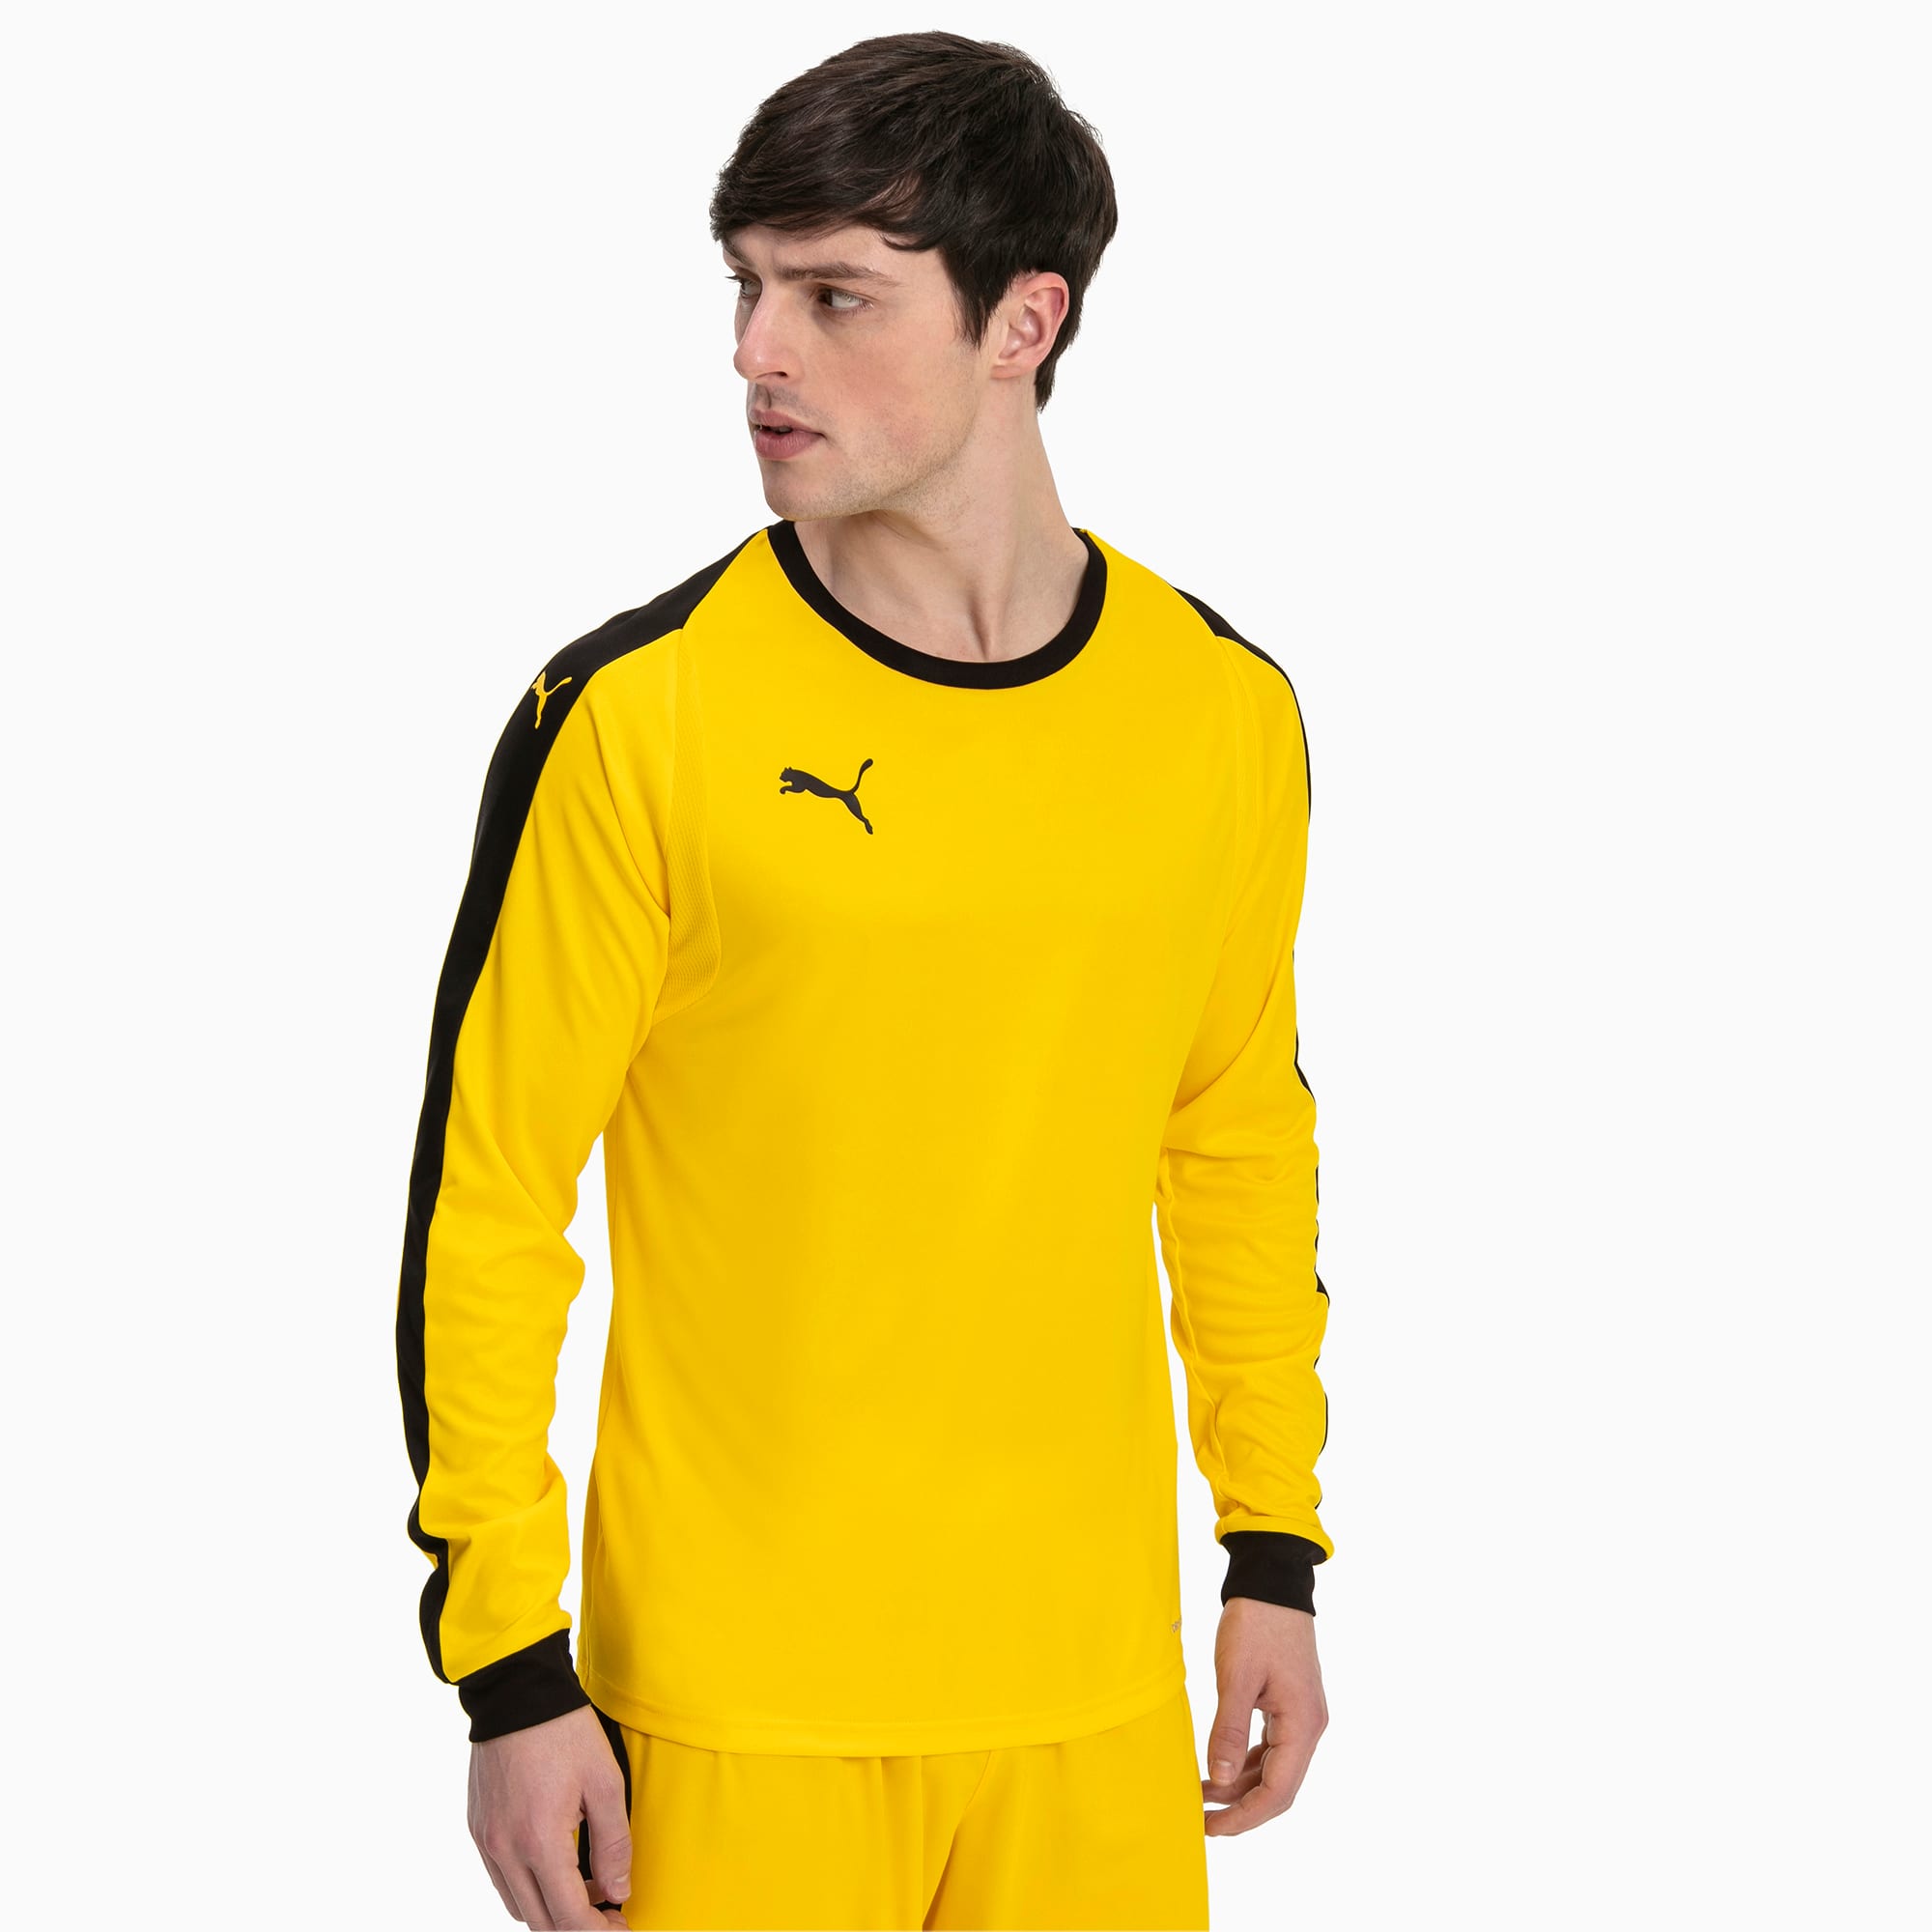 yellow goalkeeper jersey